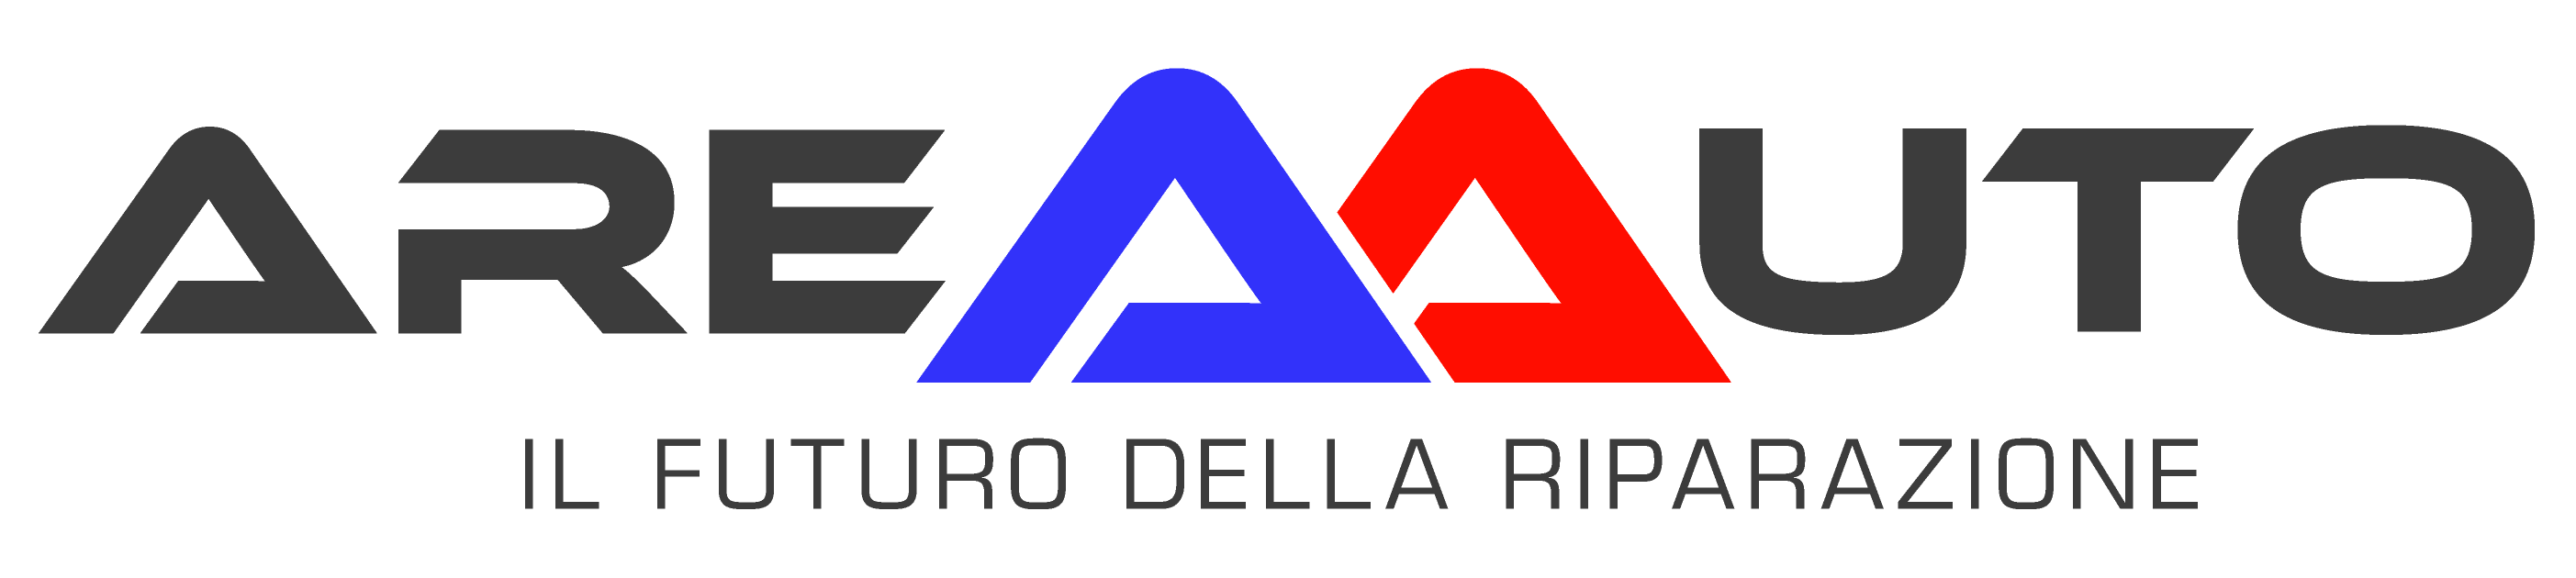 Areaauto logo